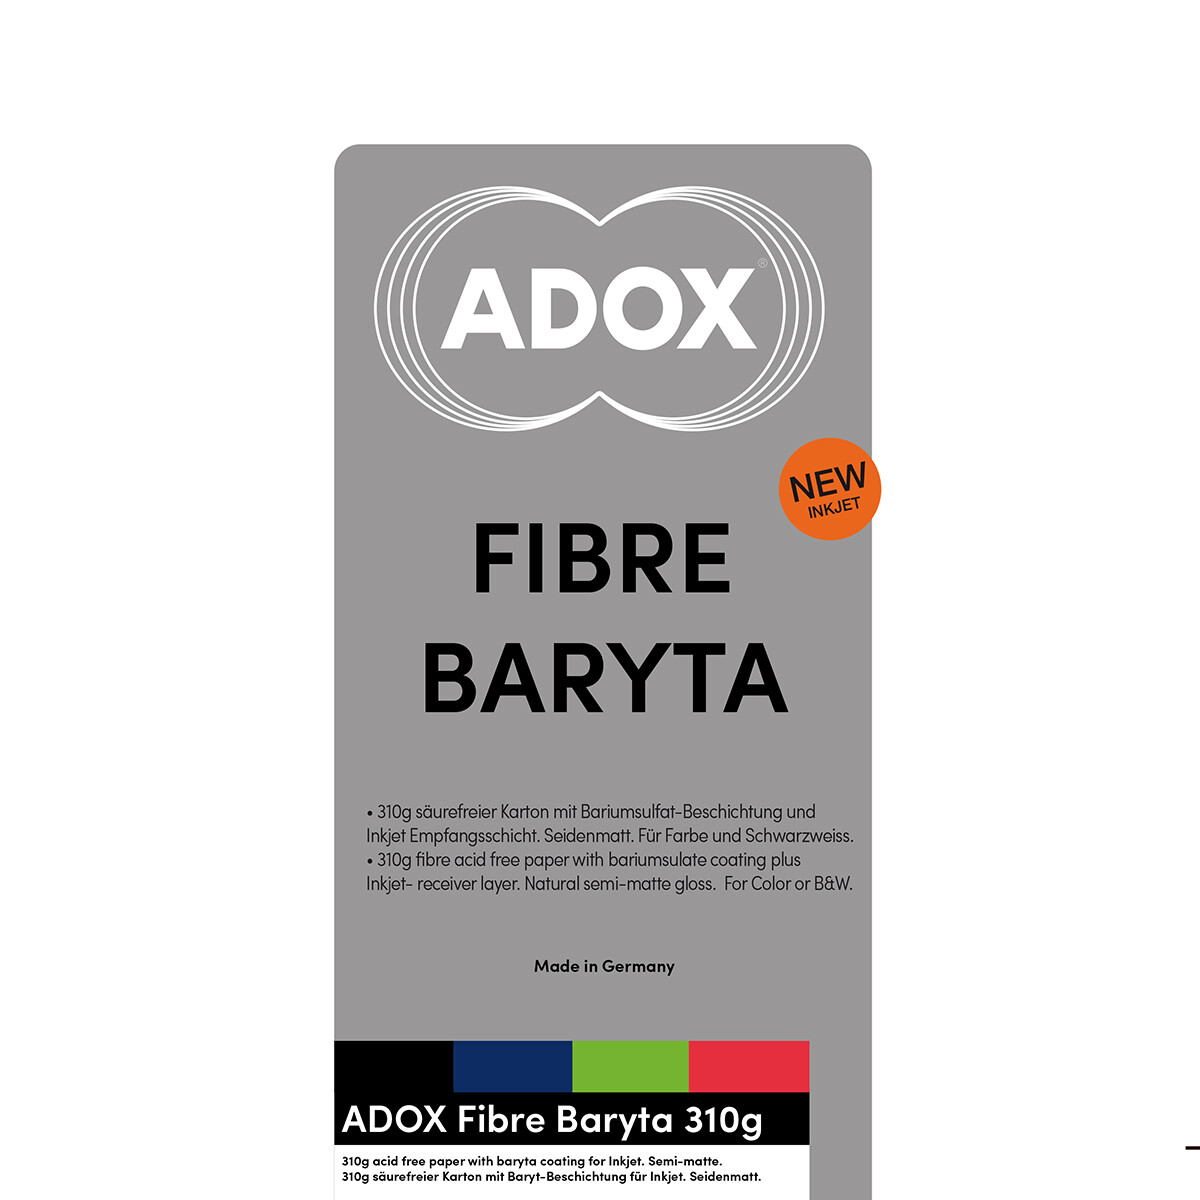 ADOX FIBRE BARYTA SILK (310g) DIN A4 21x29,7 CM (8,26x11,69 INCH) / 25 sheets